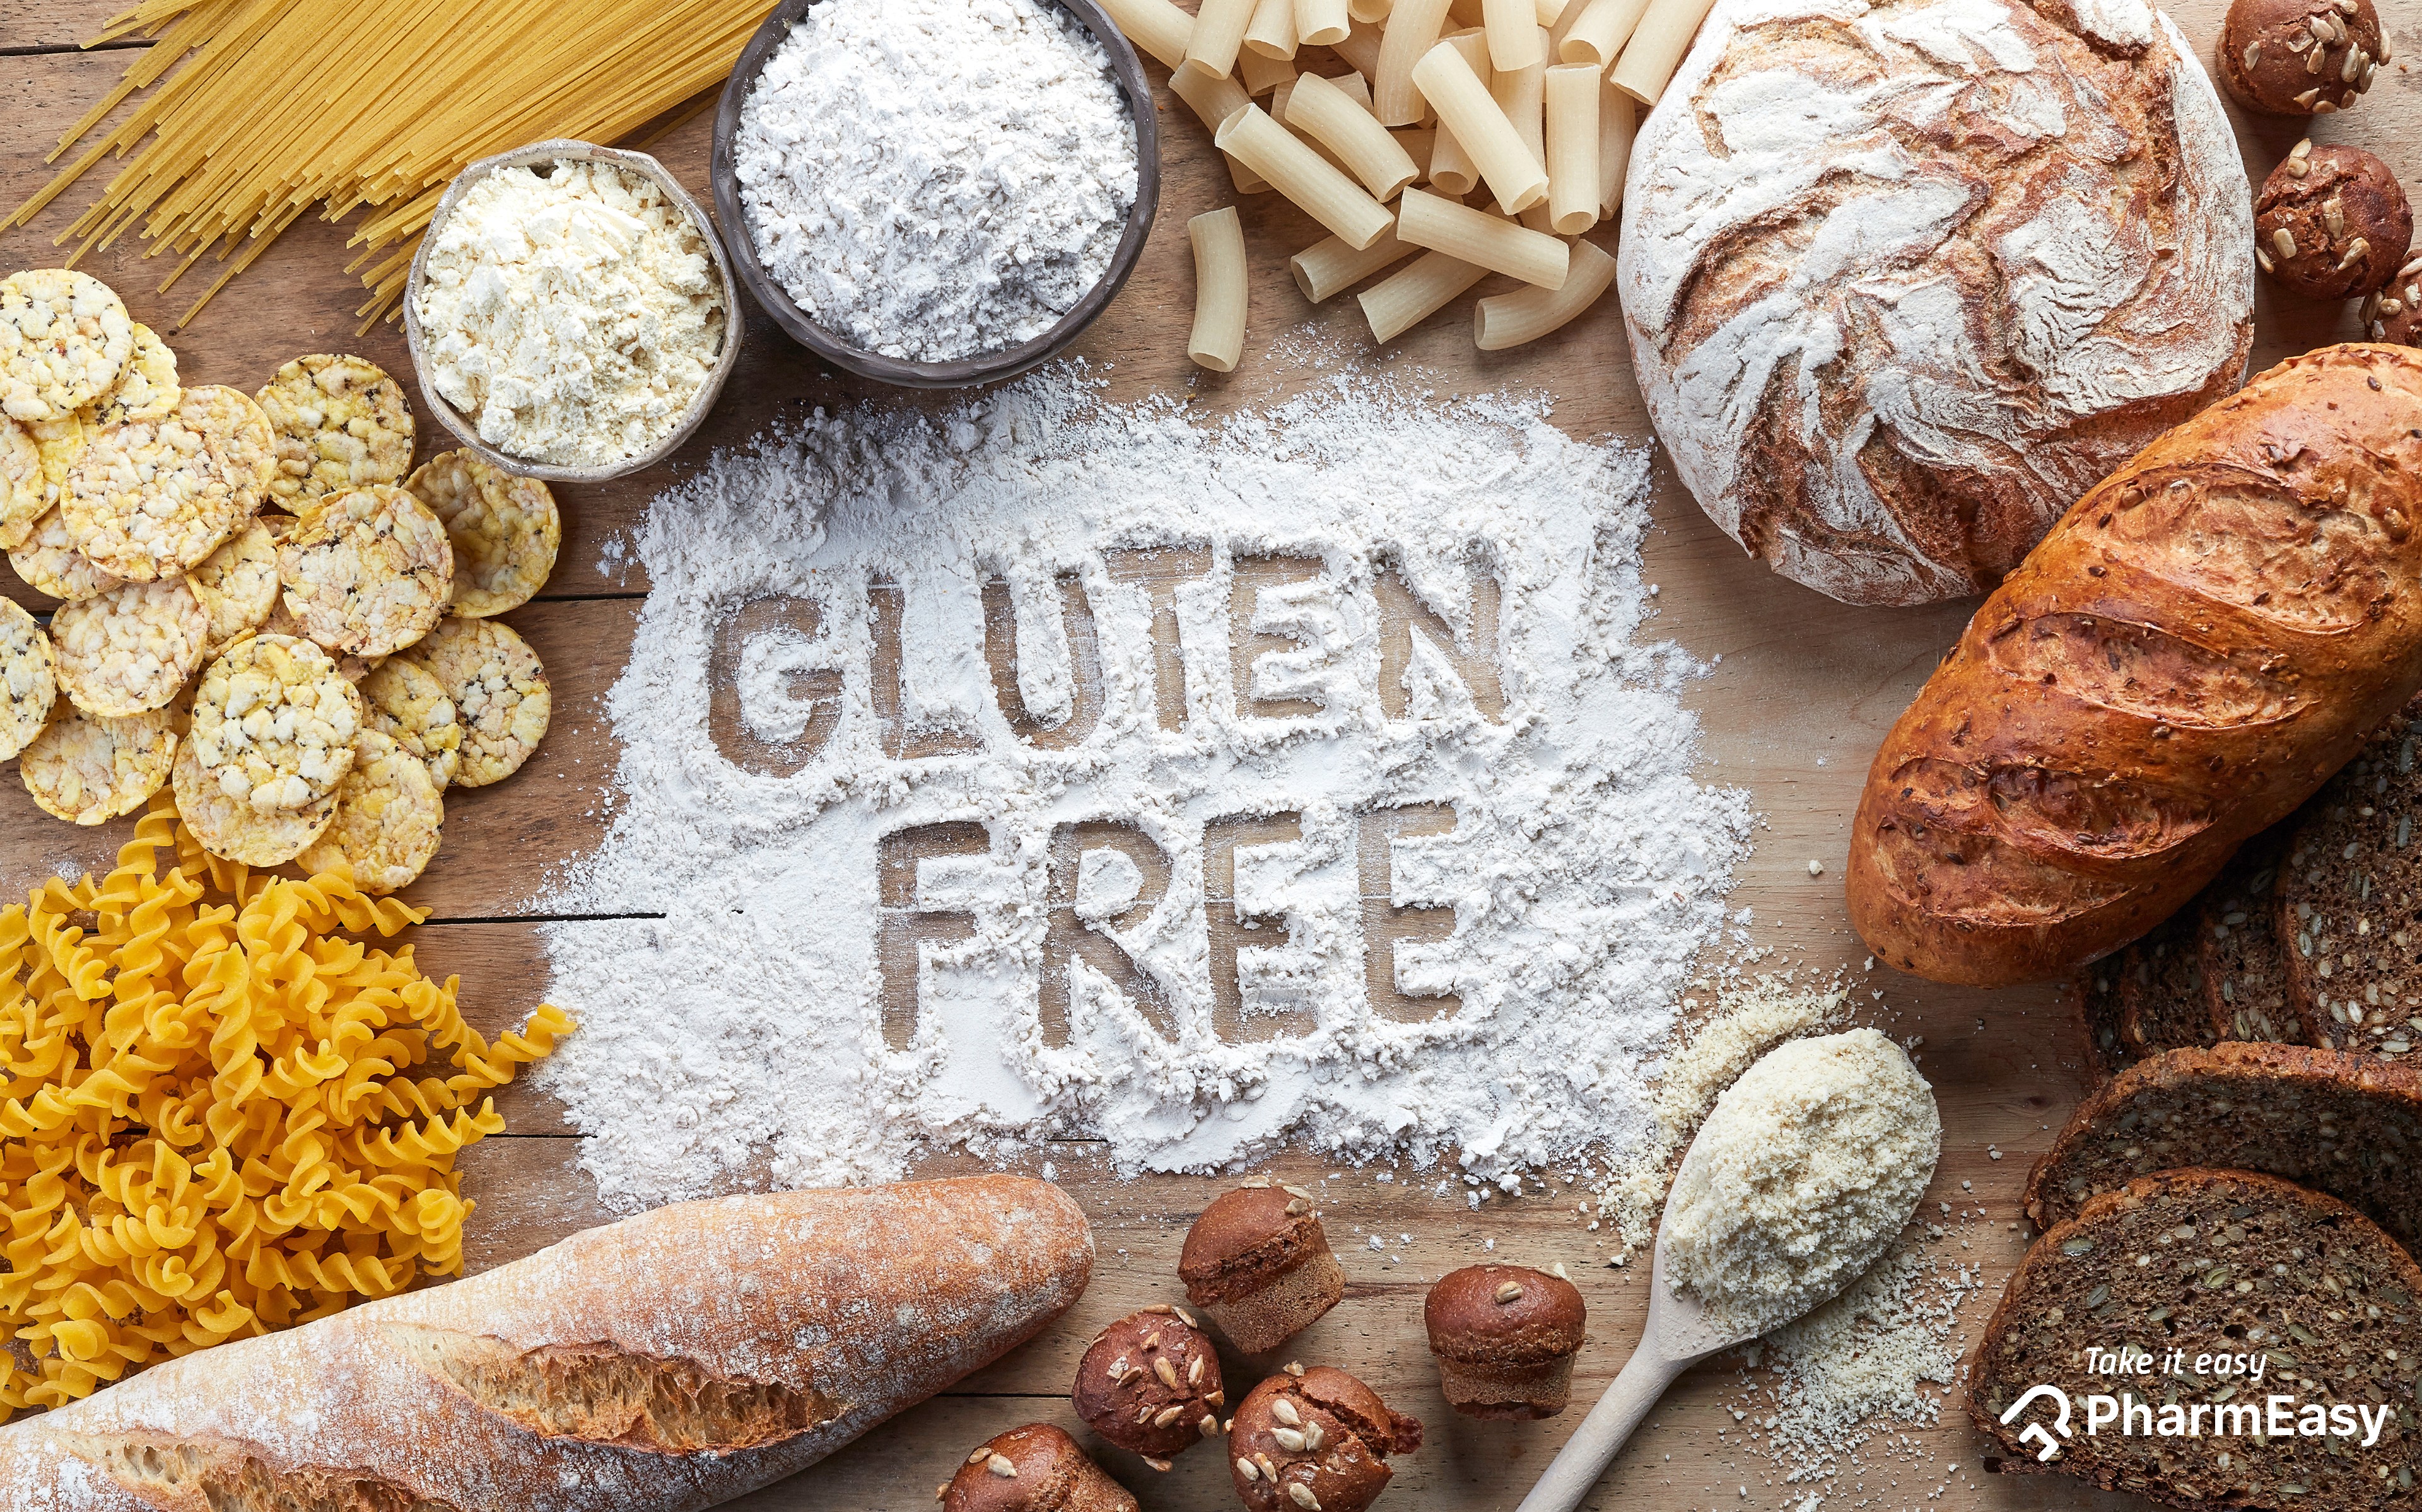 Gluten-free antioxidant rich foods